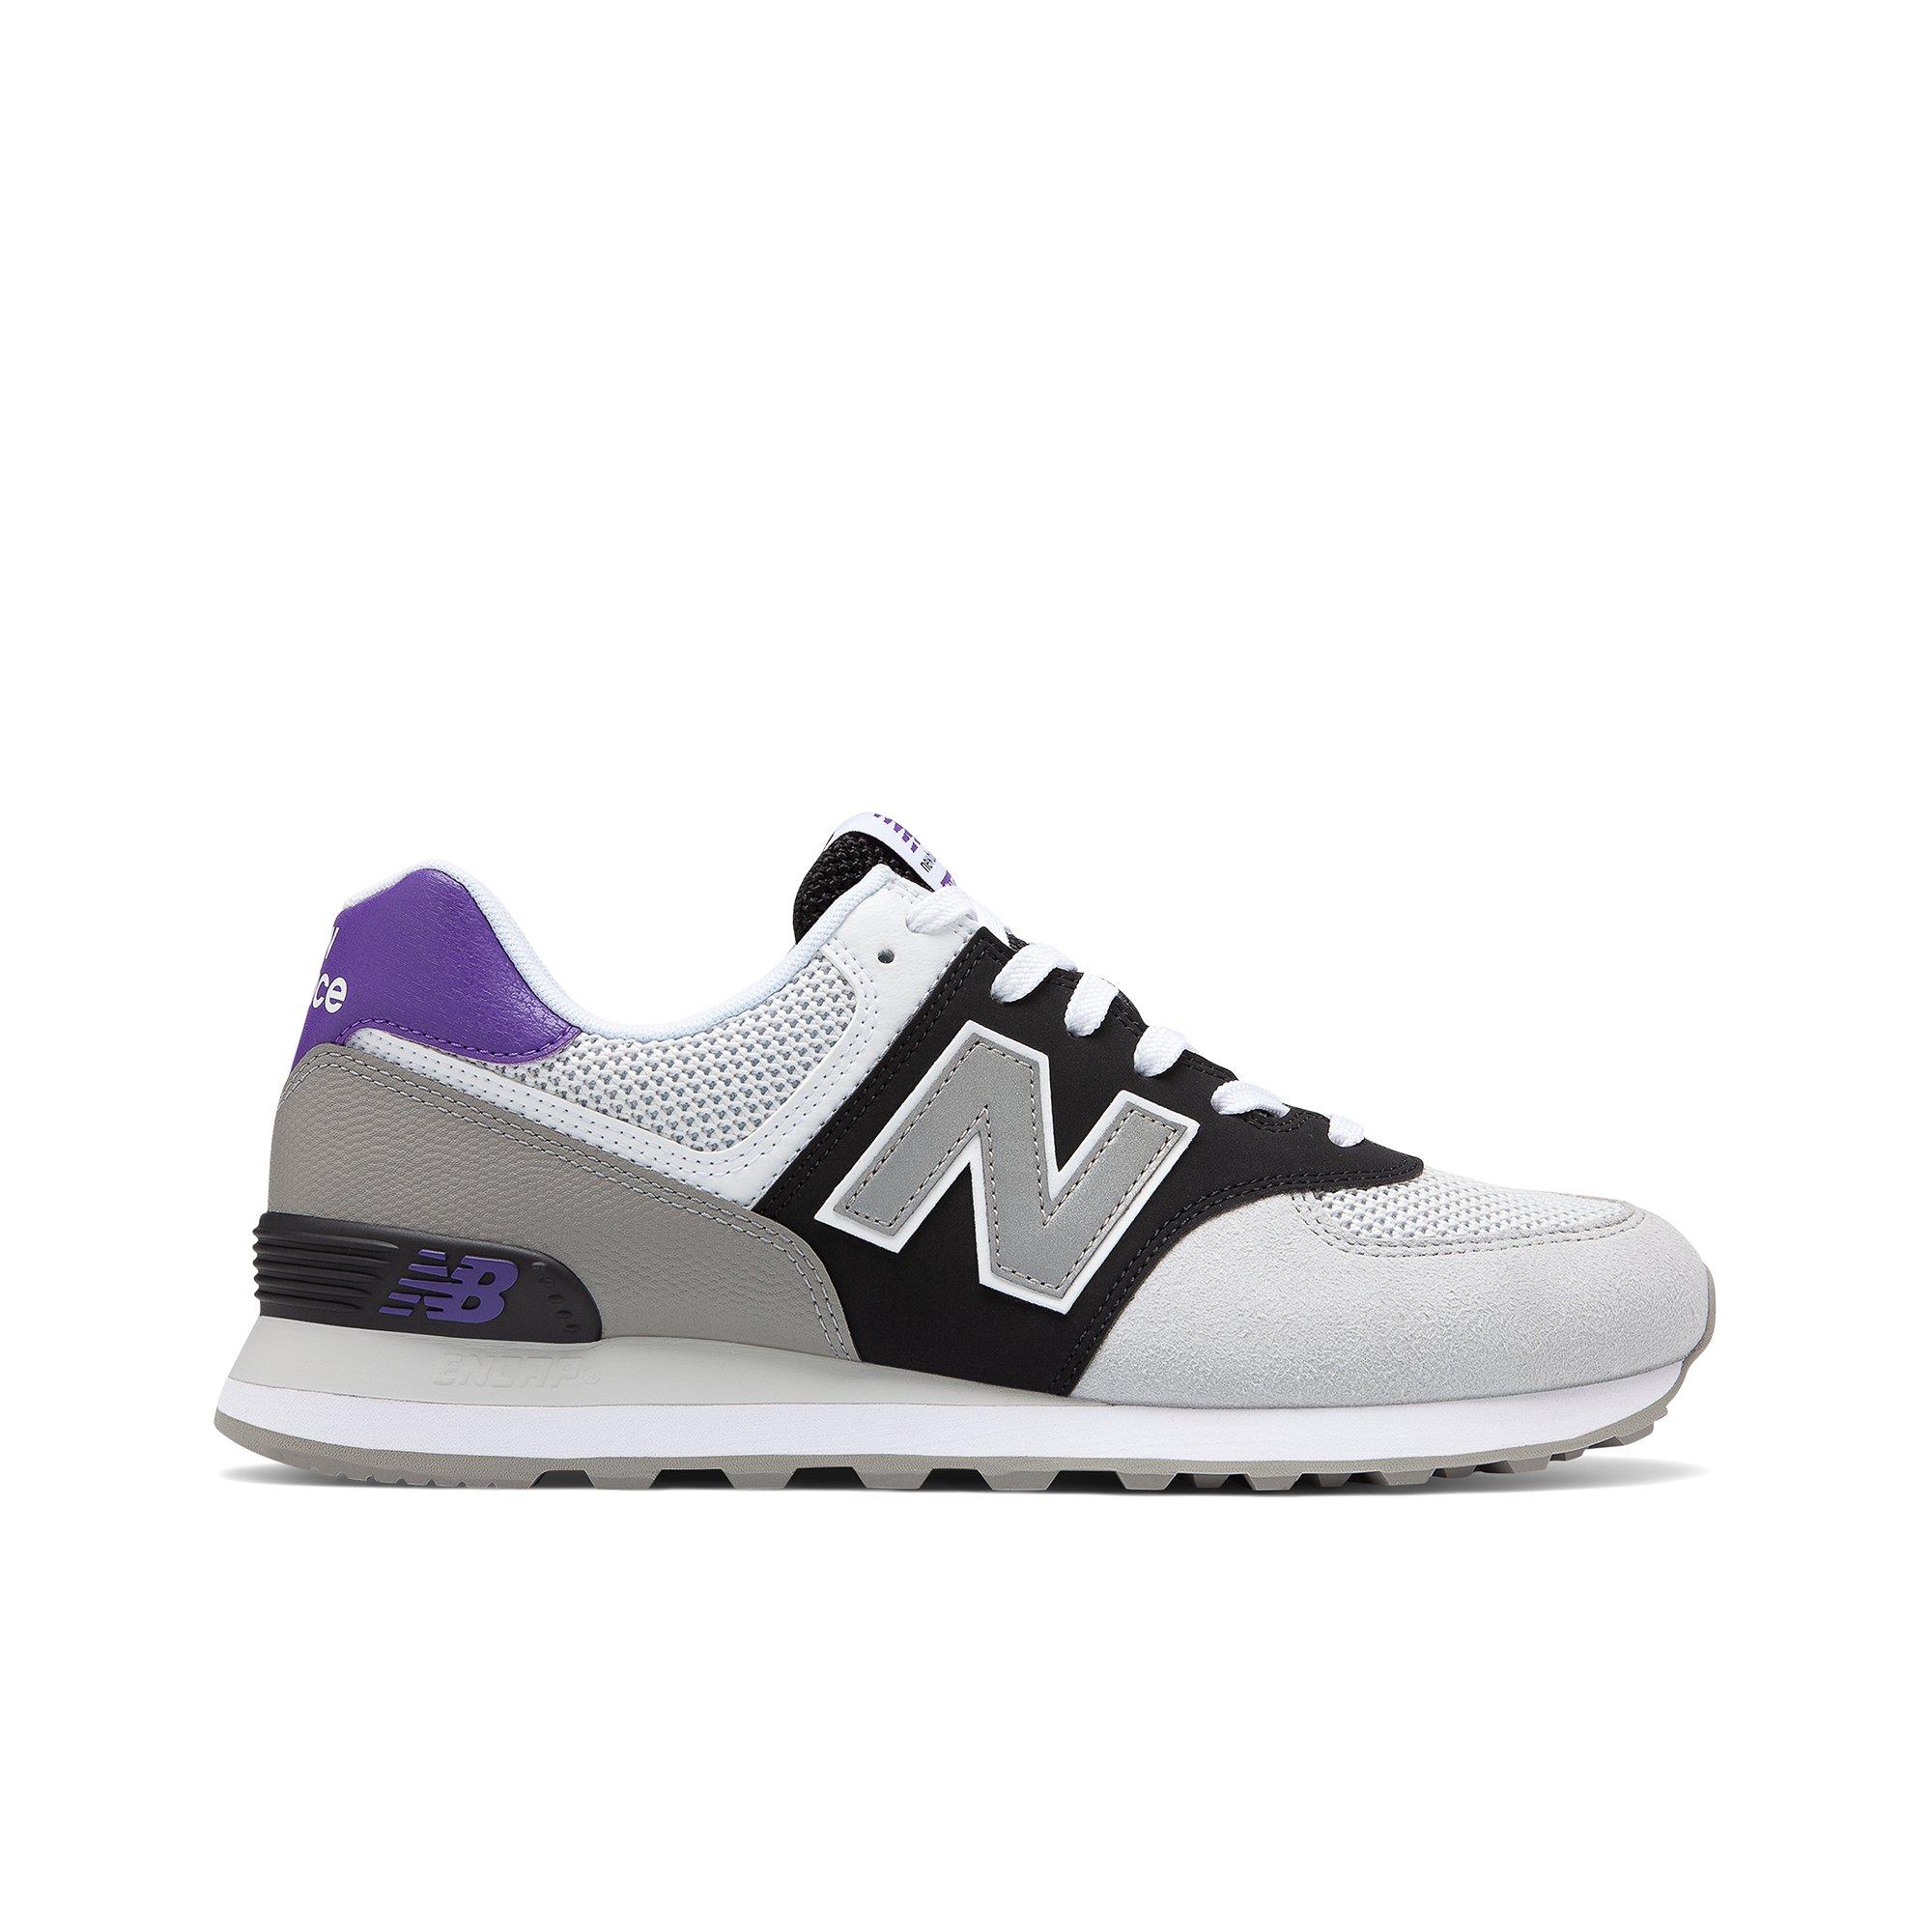 new balance purple mens shoes